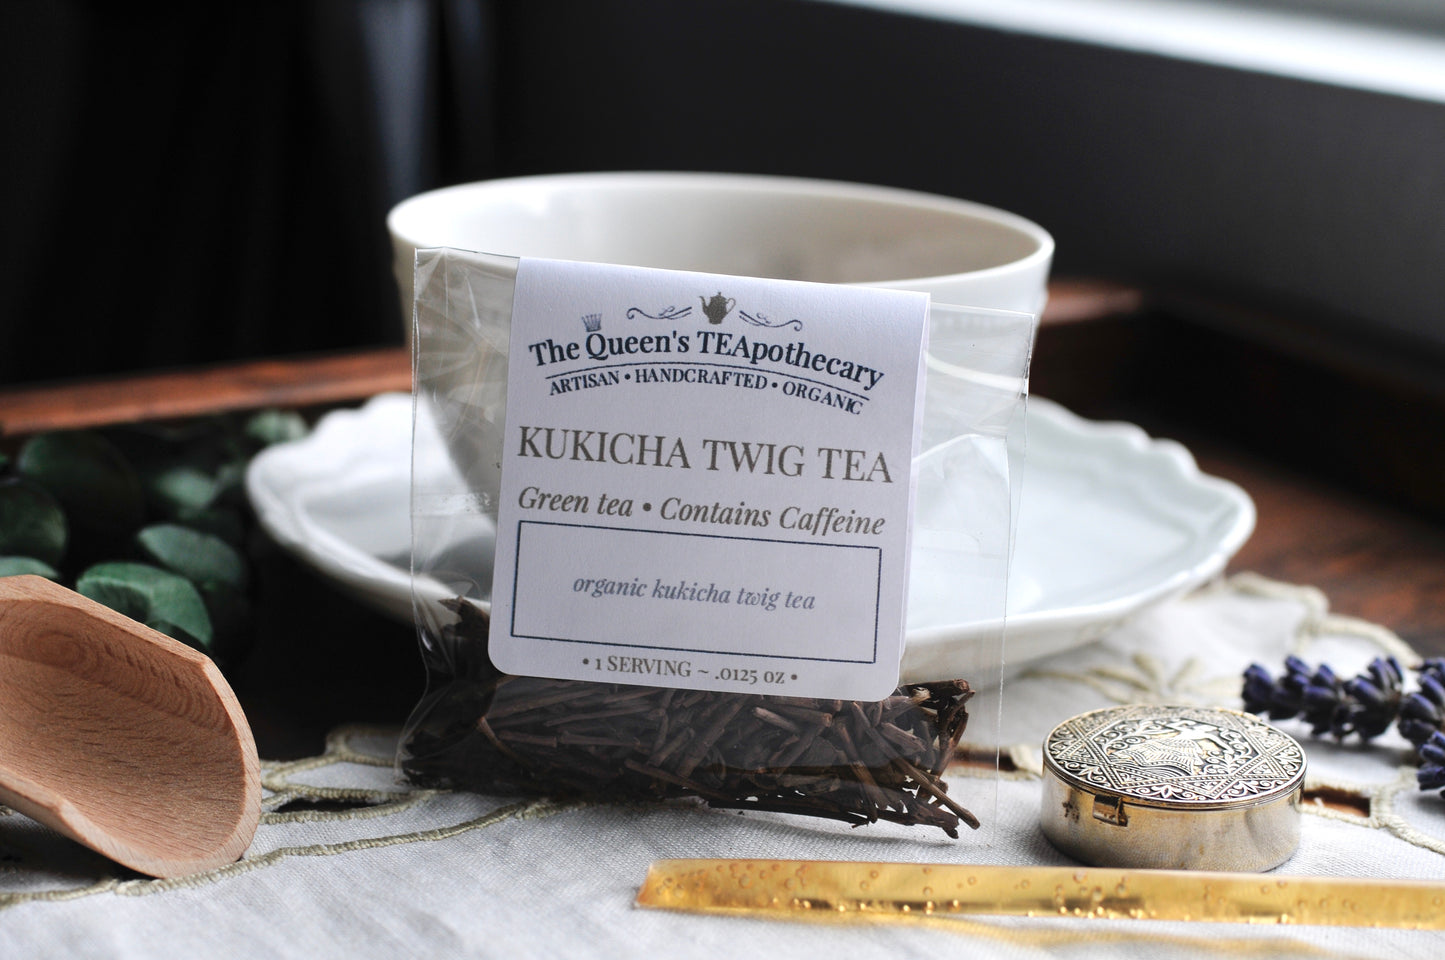 Kukicha Twig tea